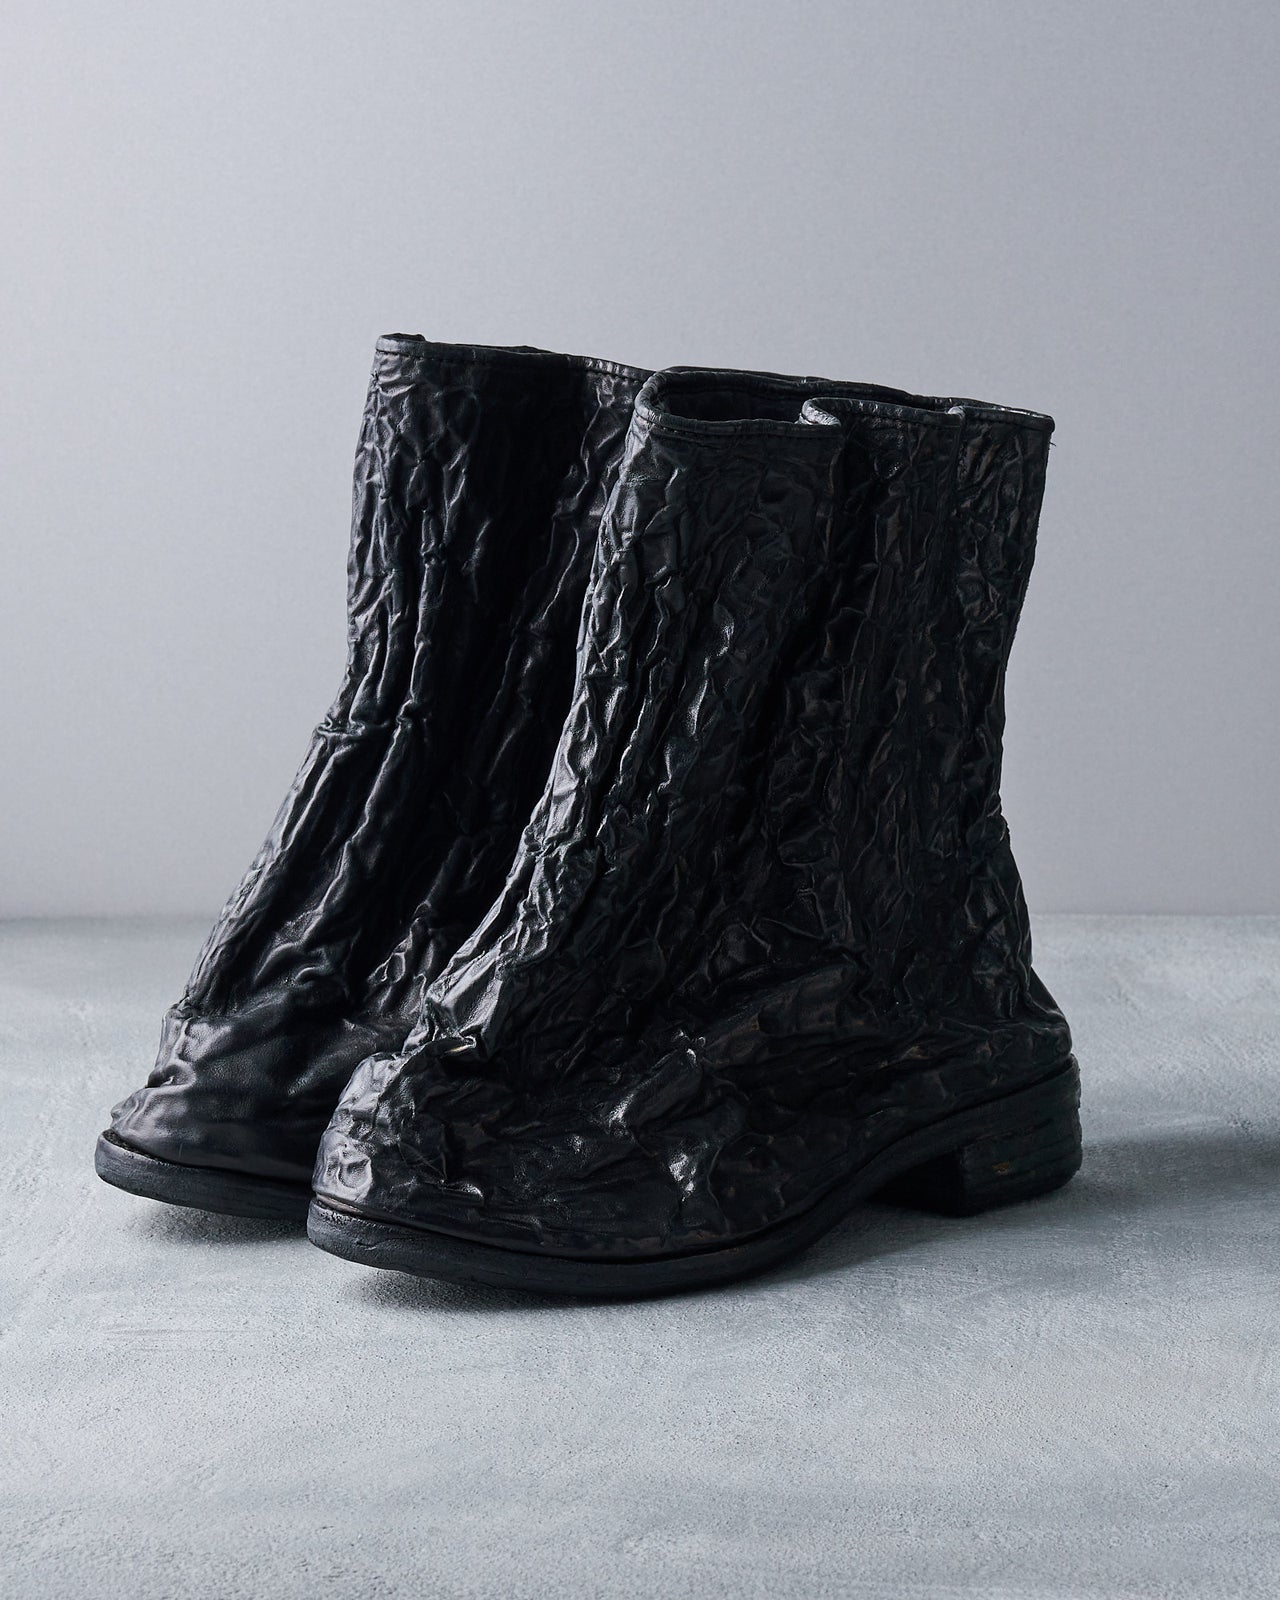 Carol Christian Poell 2010 Formless Aluminium leather crush boot